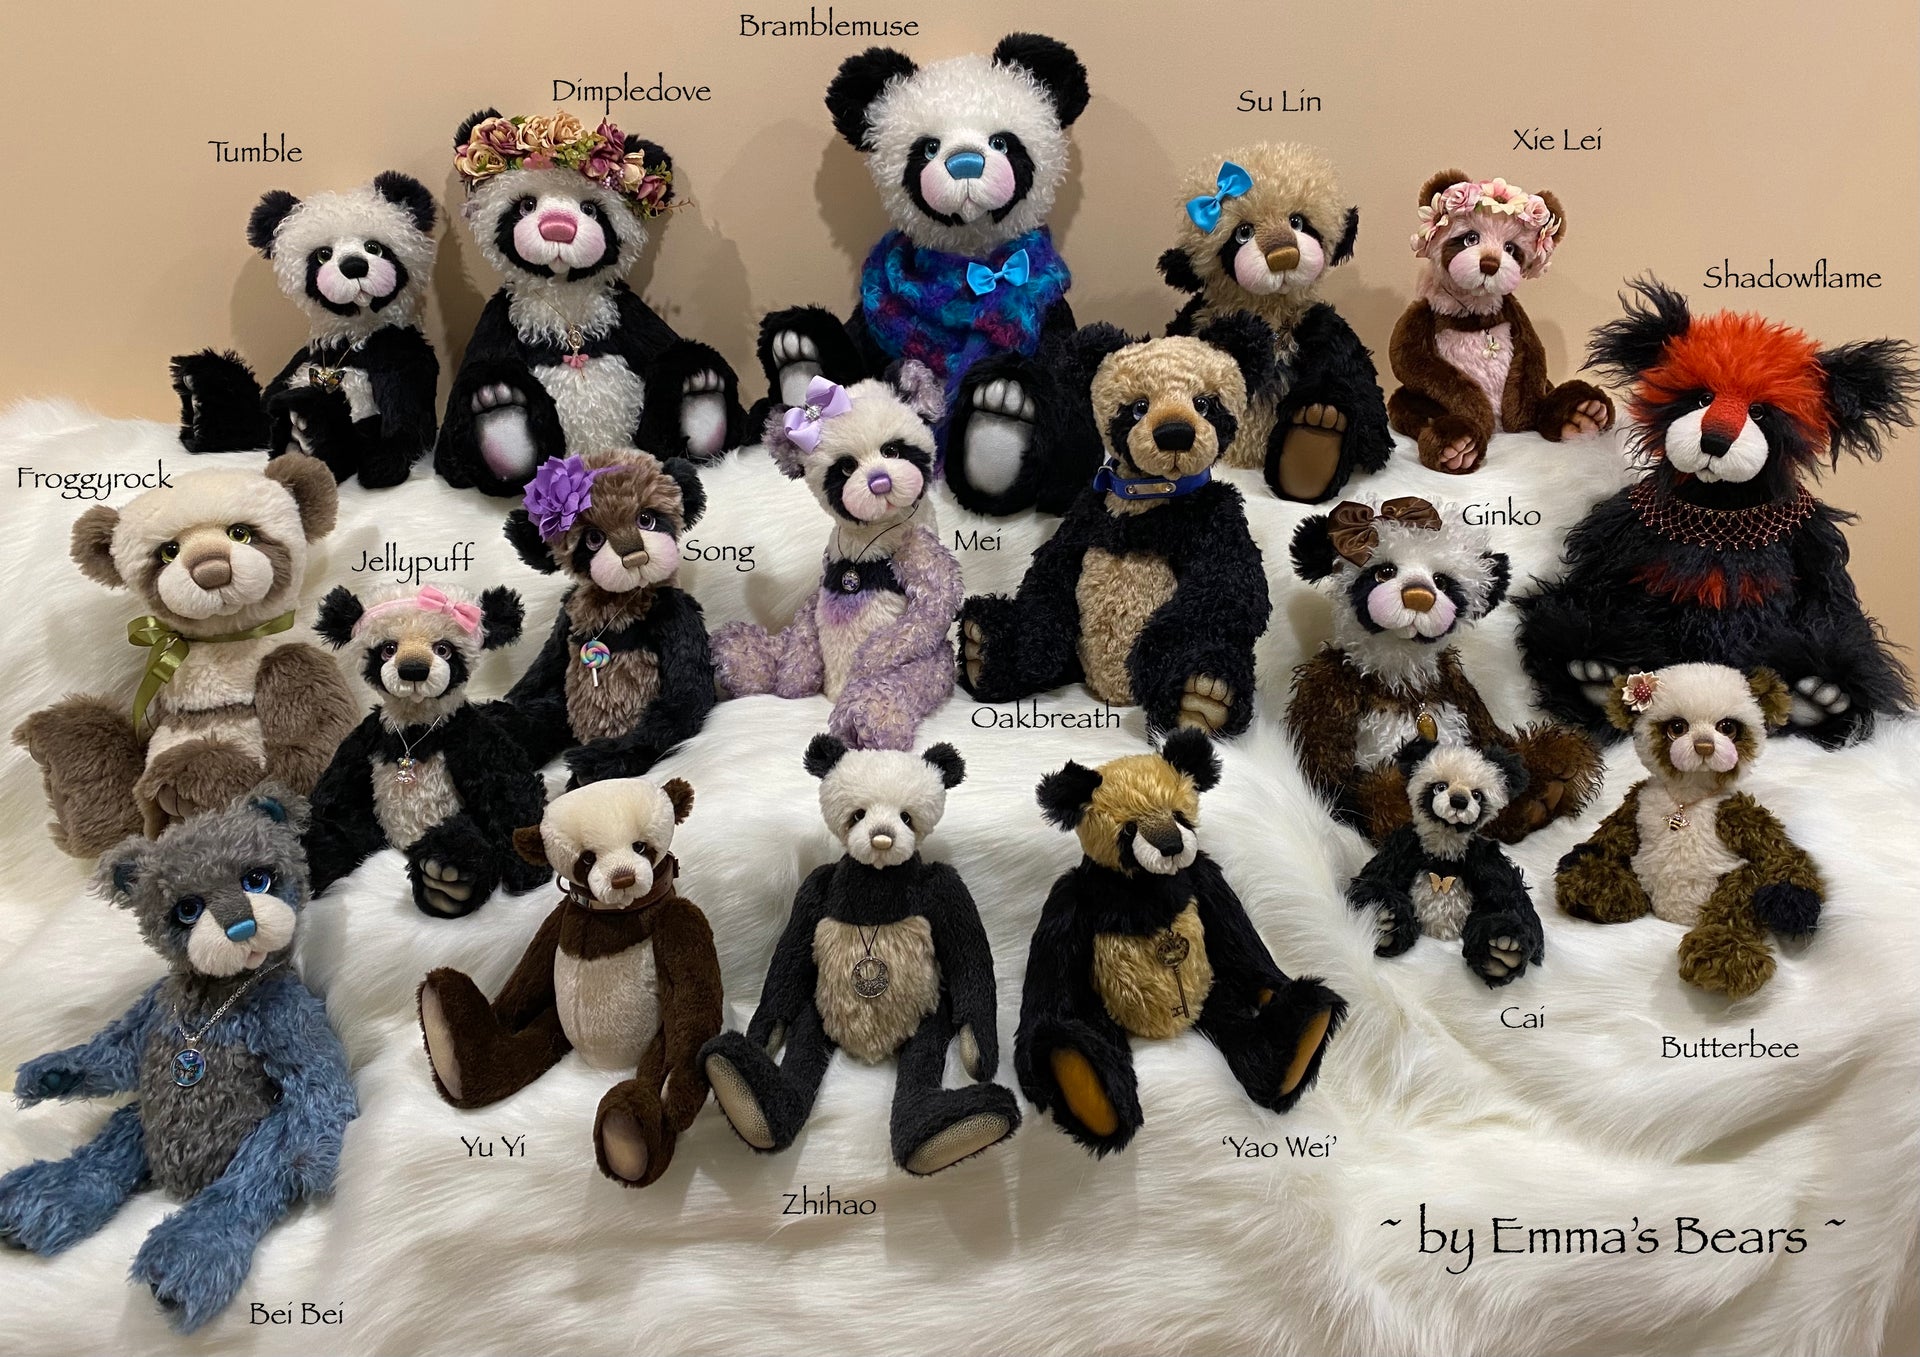 Su Lin - 17" mohair artist panda bear by Emma's Bears  - OOAK